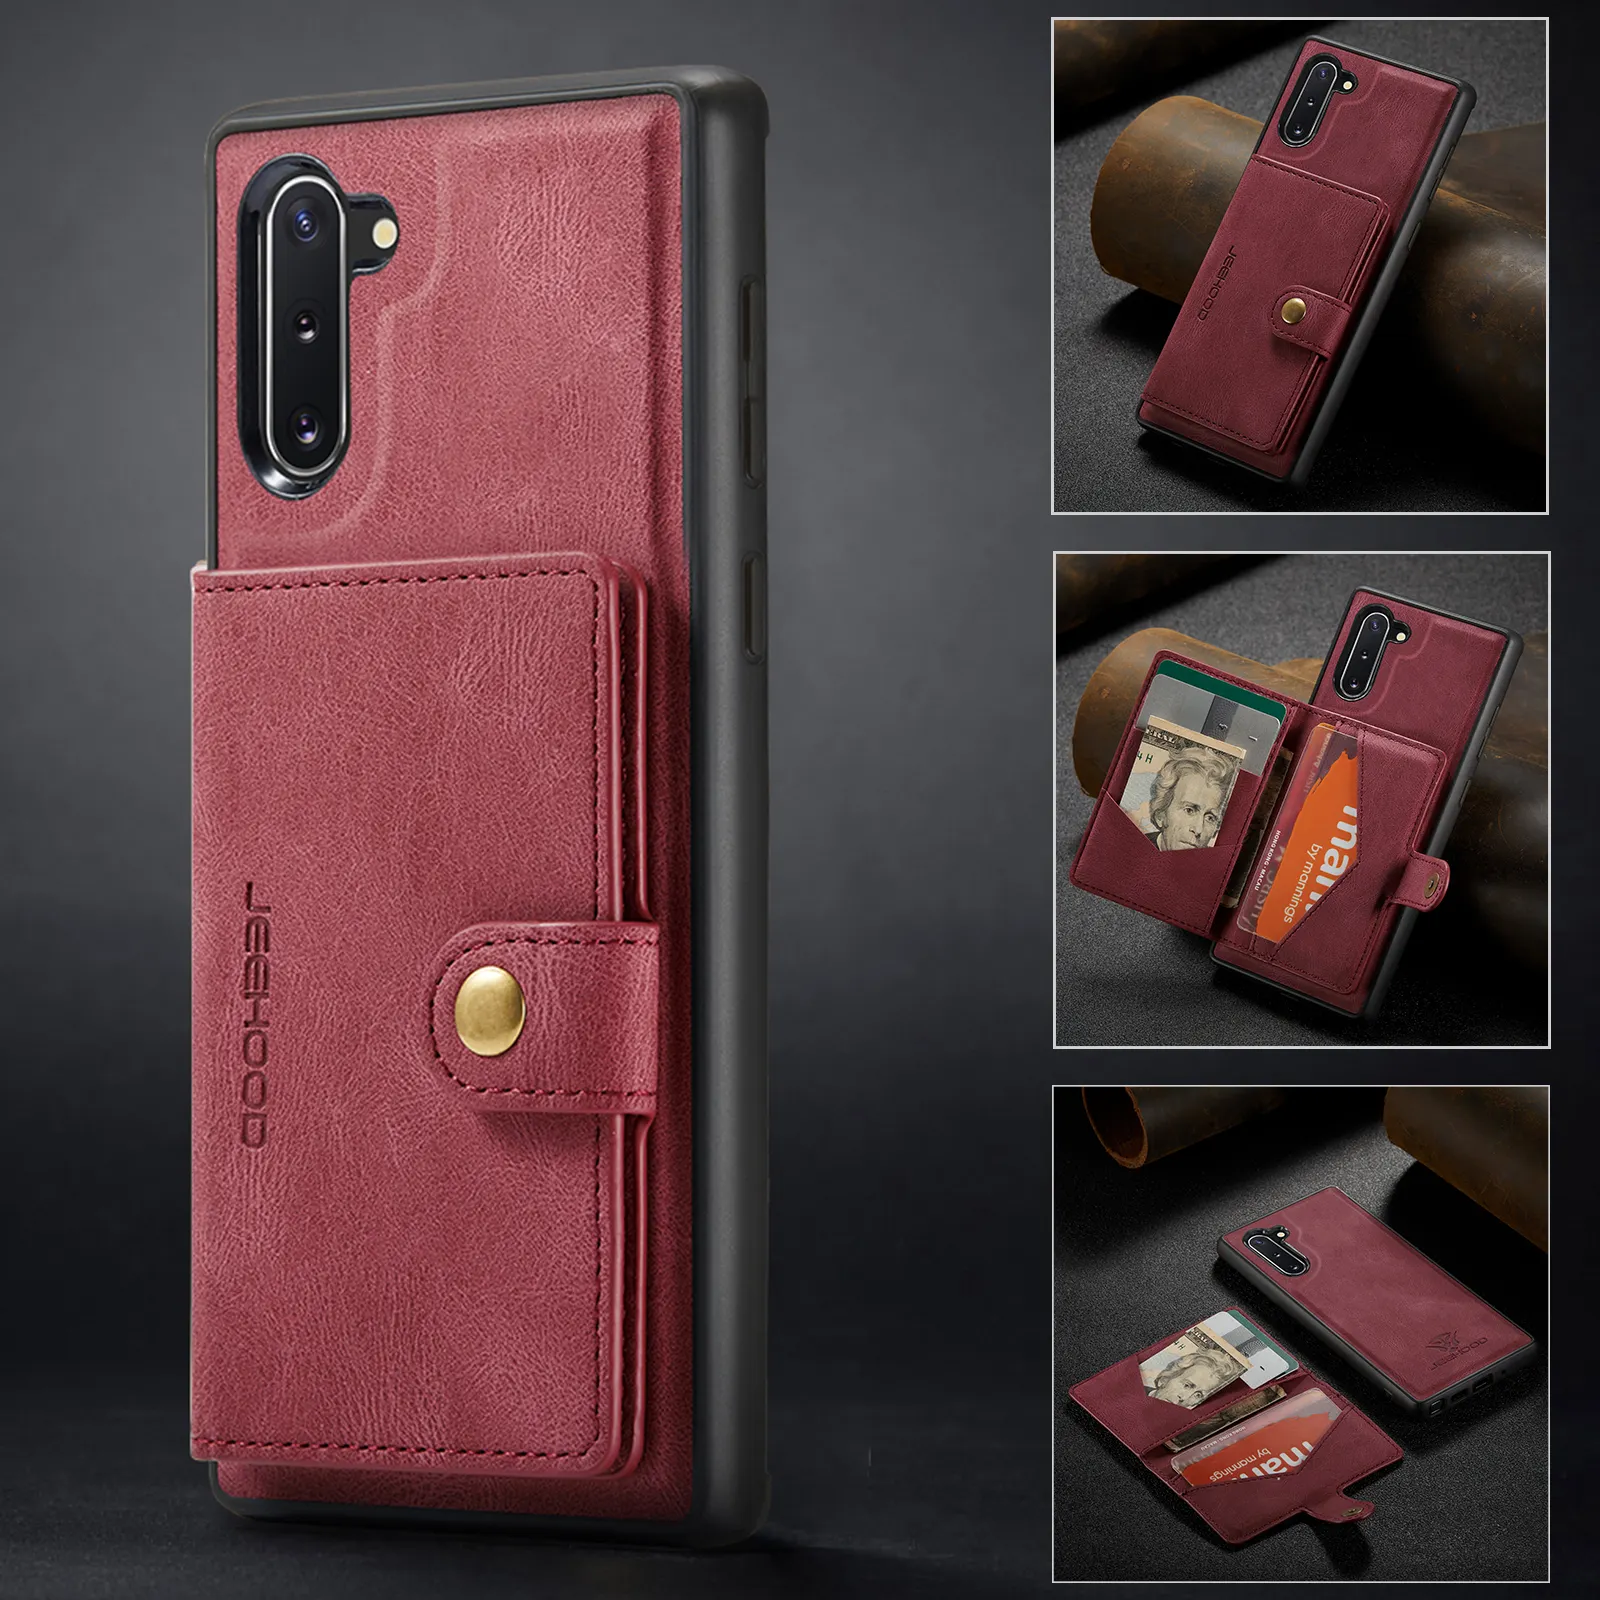 Capa de couro 2 em 1 para celular Samsung Galaxy Note 10 carteira de luxo magnética multifuncional